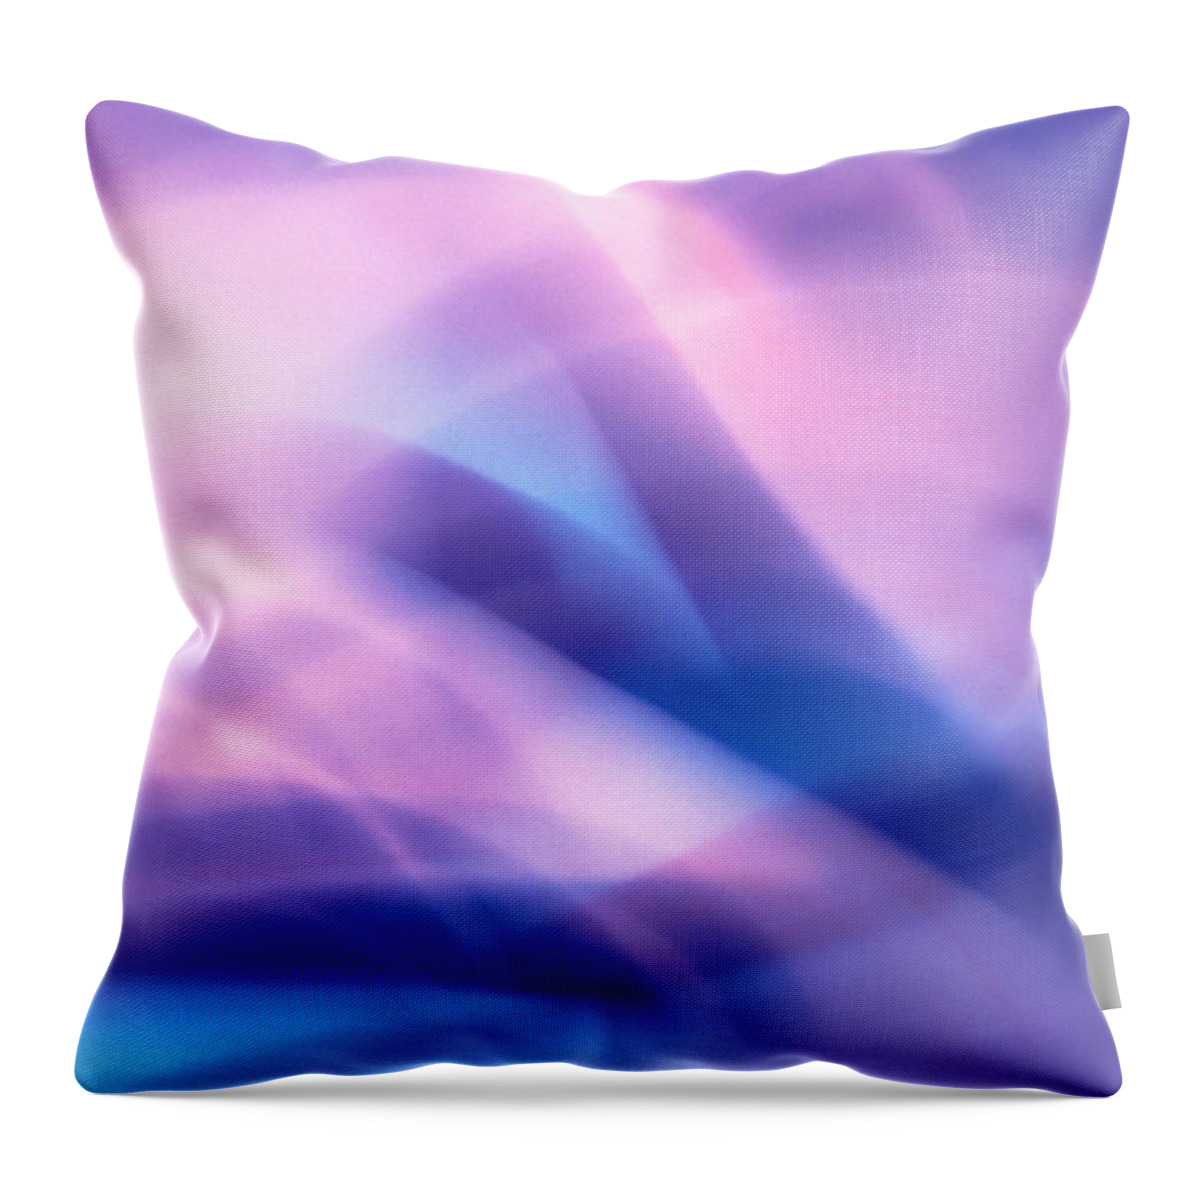 Purple Throw Pillow featuring the photograph Natural Blur by John Foxx